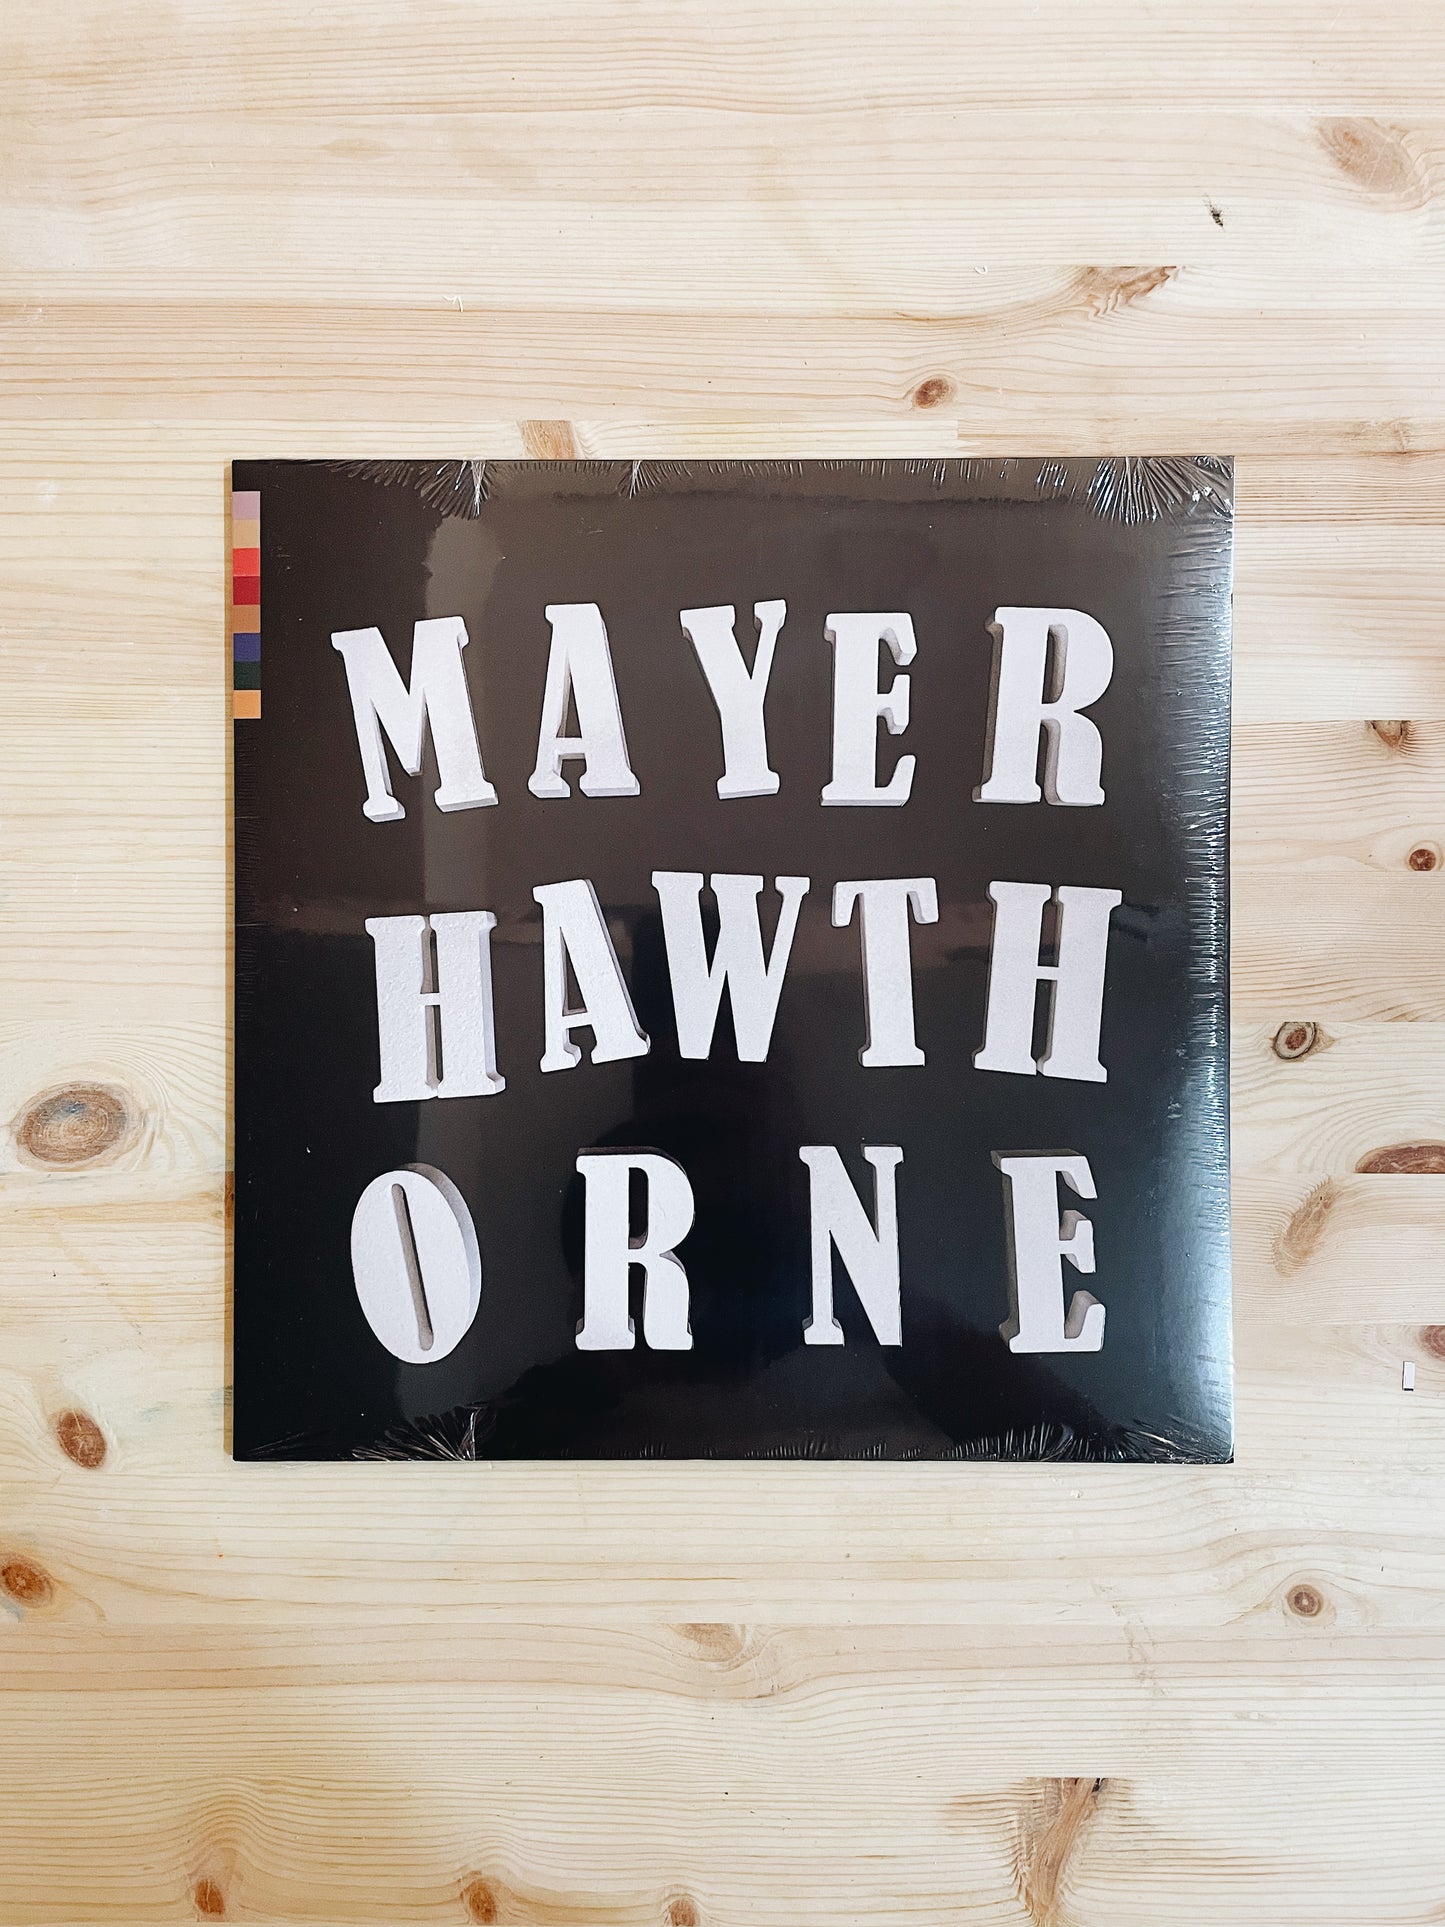 Mayer Hawthorne - Rare Changes